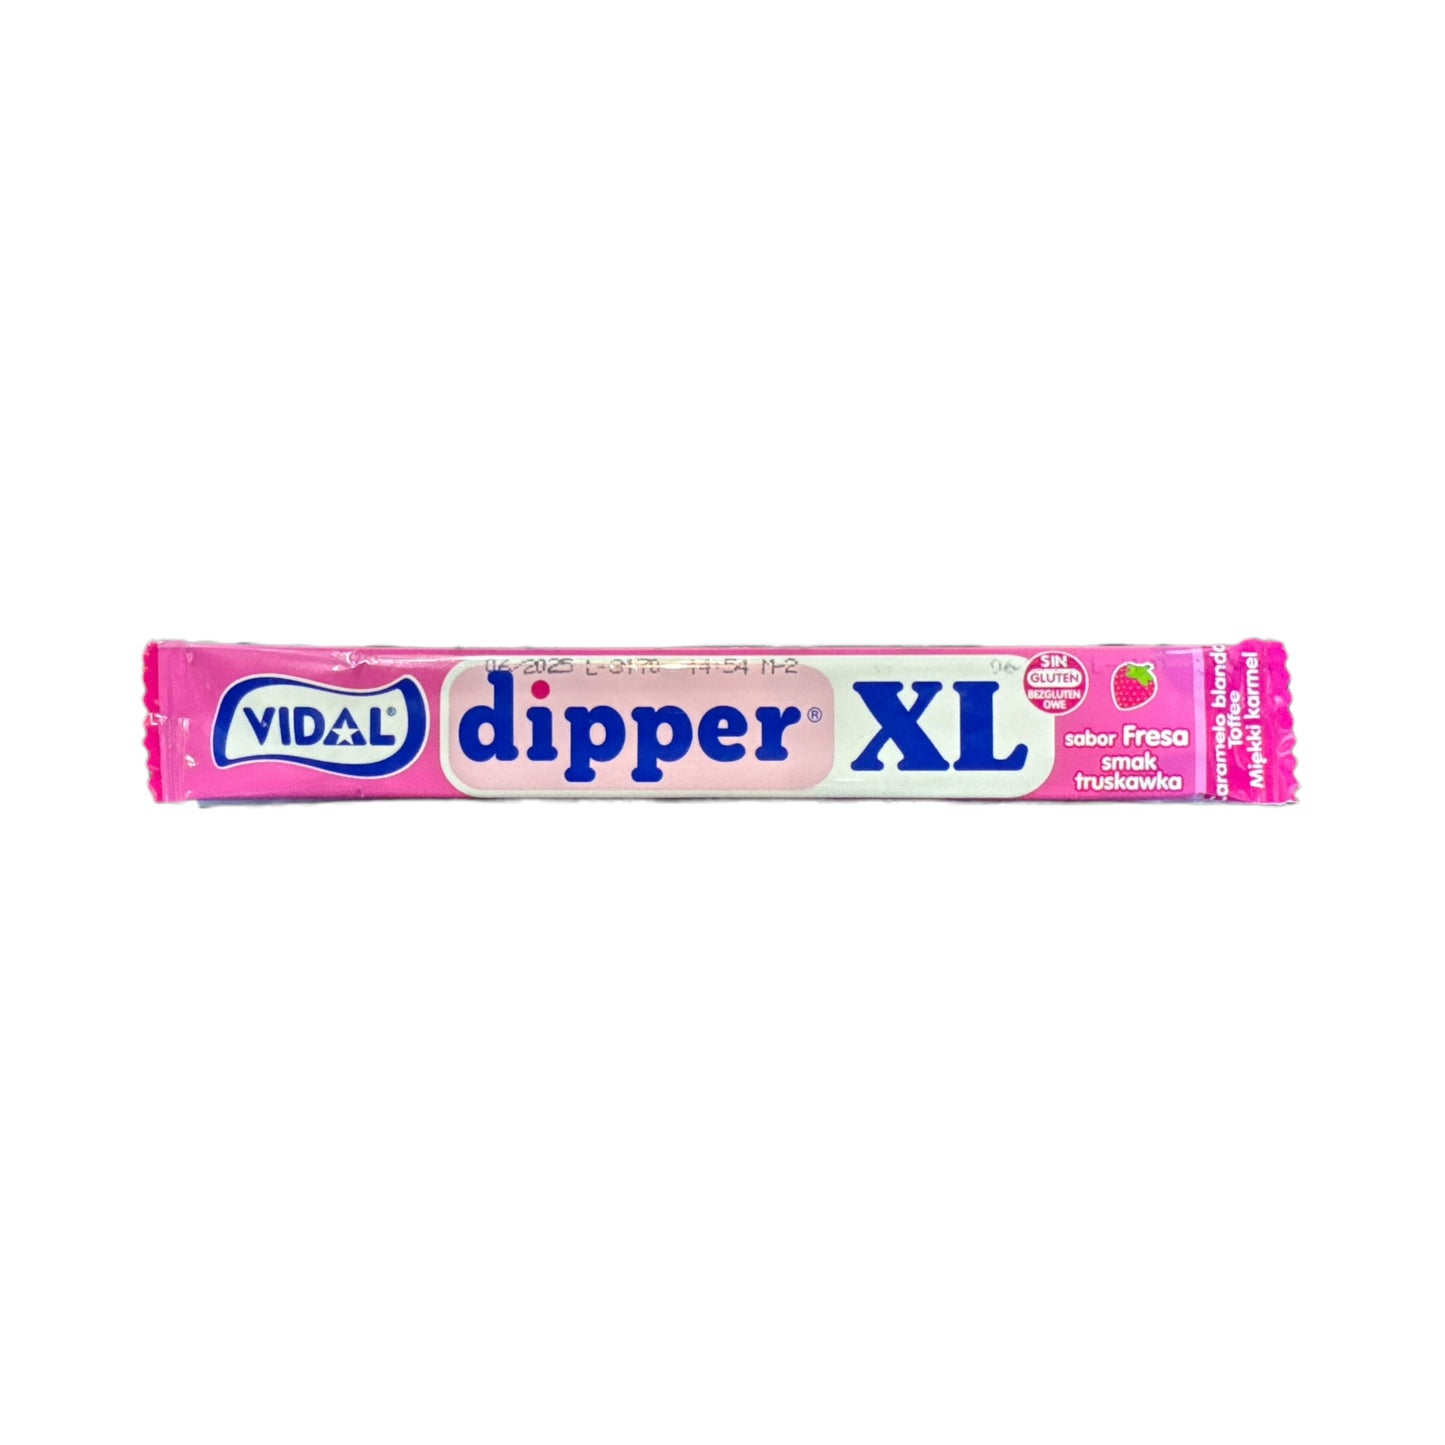 Vidal Dipper XL Strawberry Chew Bar - 10.5g